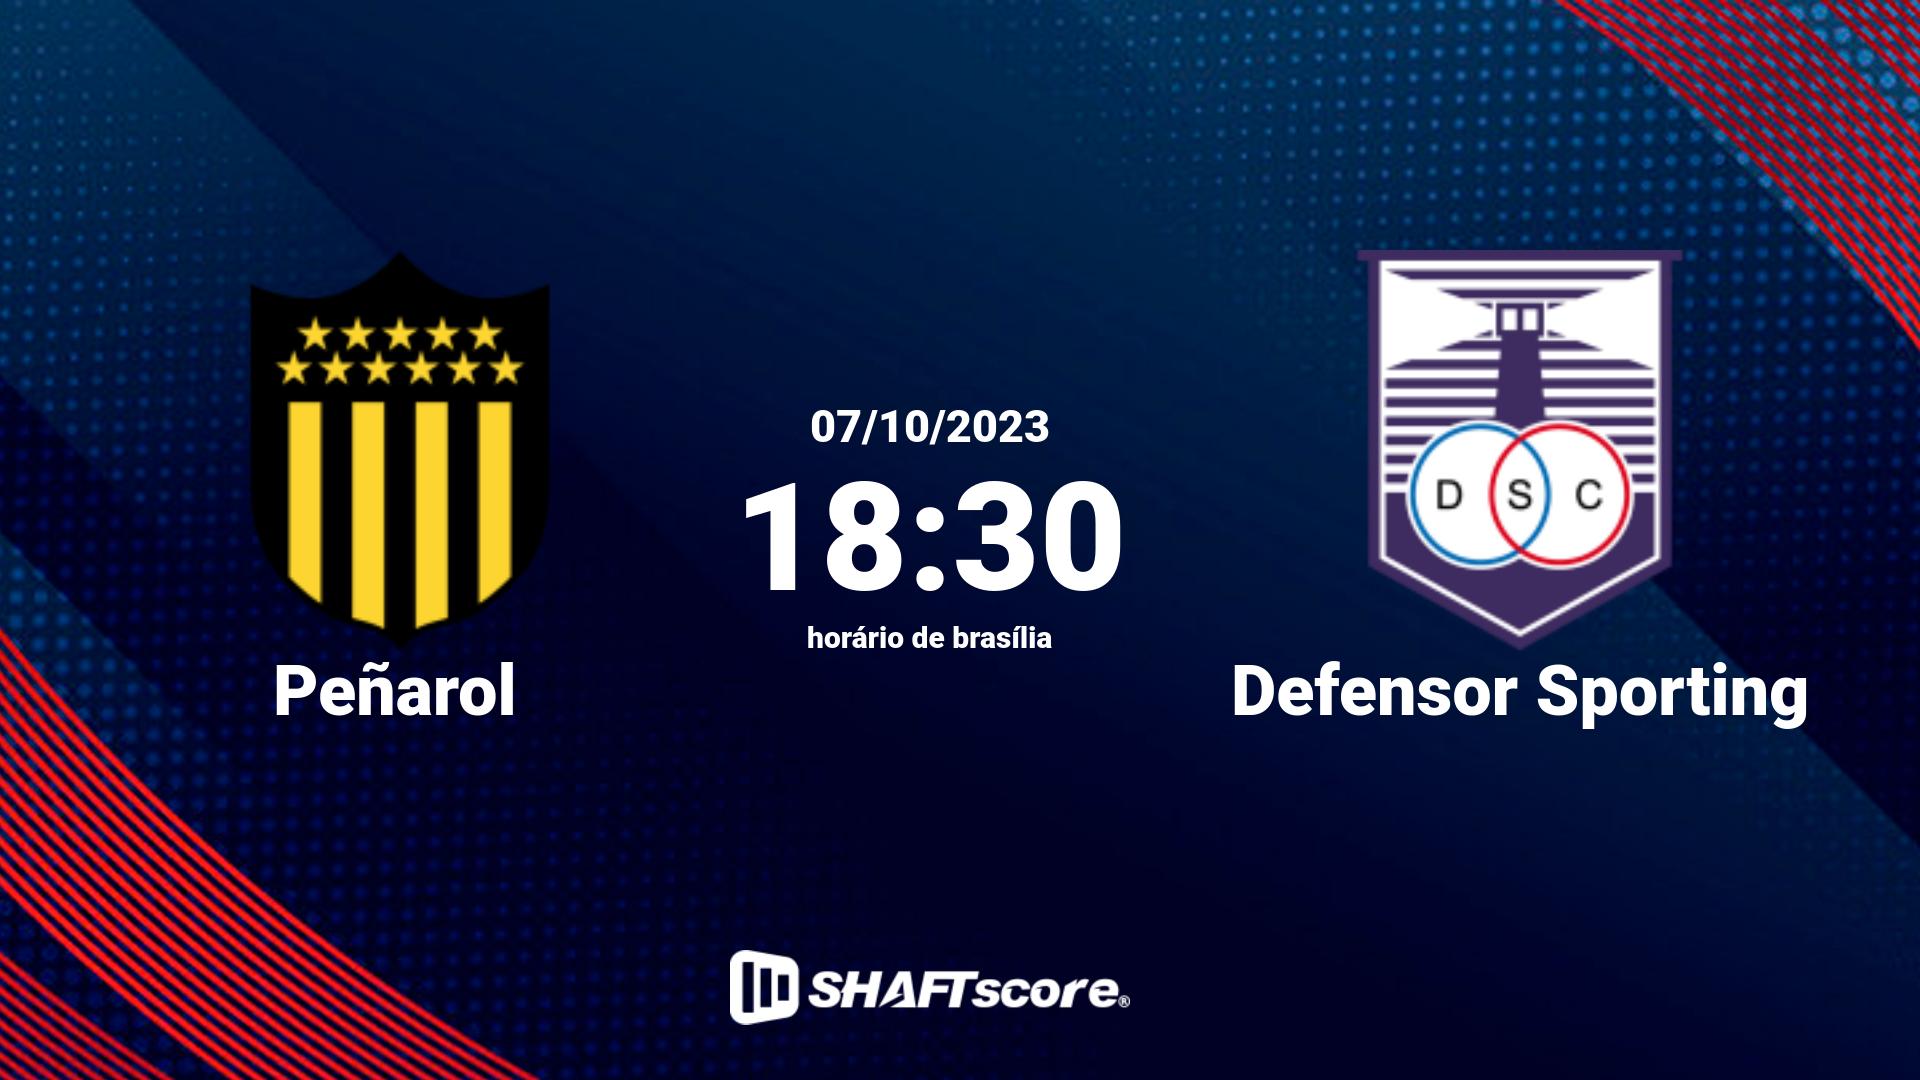 Estatísticas do jogo Peñarol vs Defensor Sporting 07.10 18:30